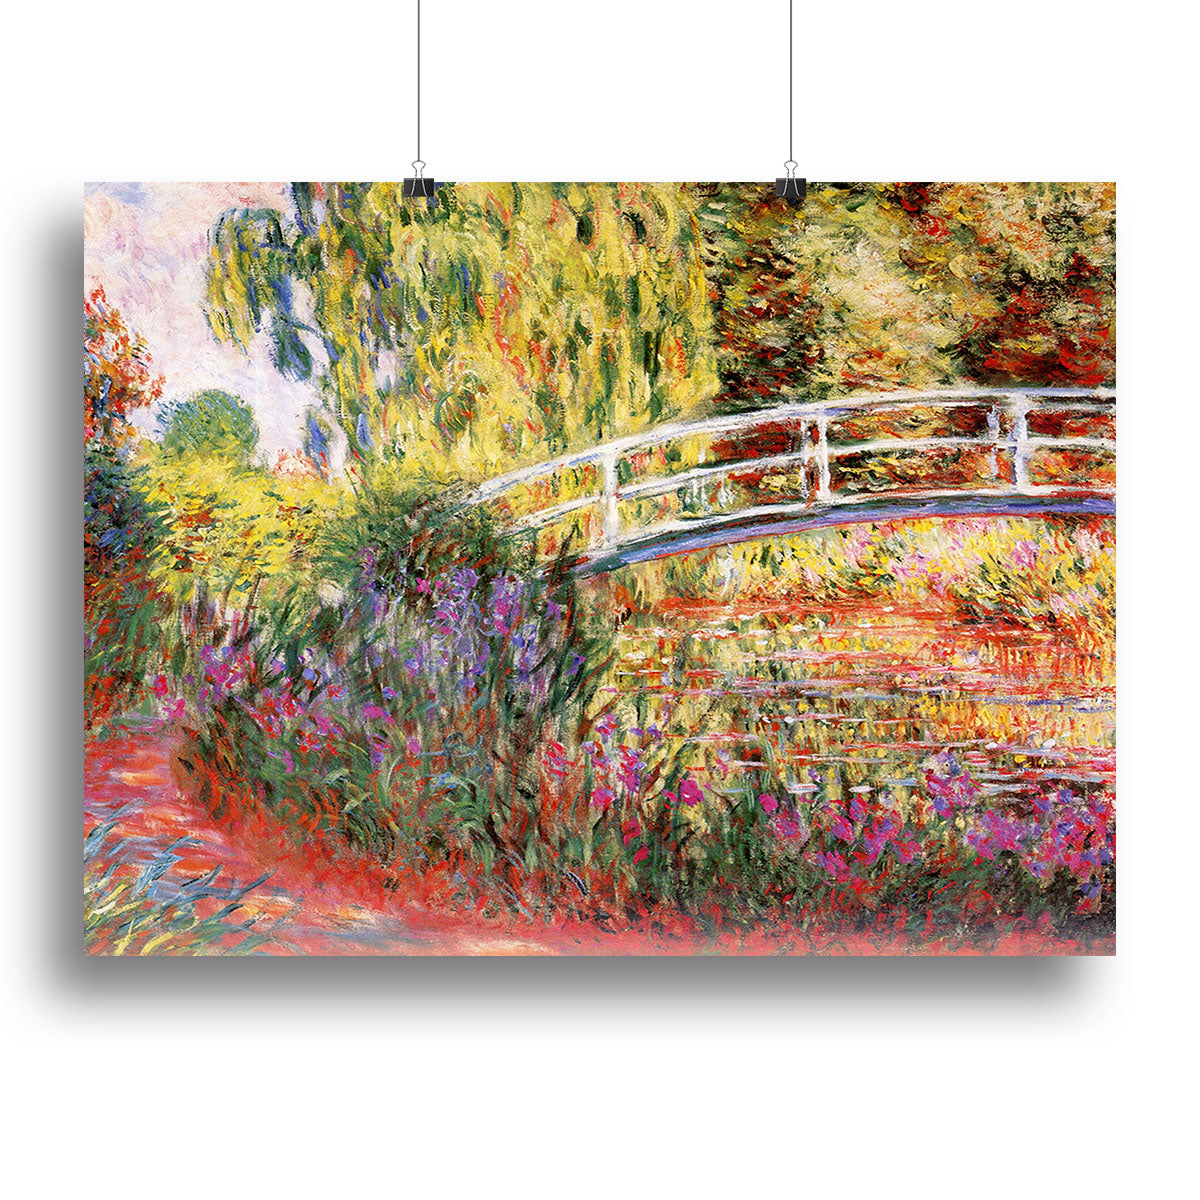 Le Bassin aux Nympheas by Monet Canvas Print or Poster - Canvas Art Rocks - 2